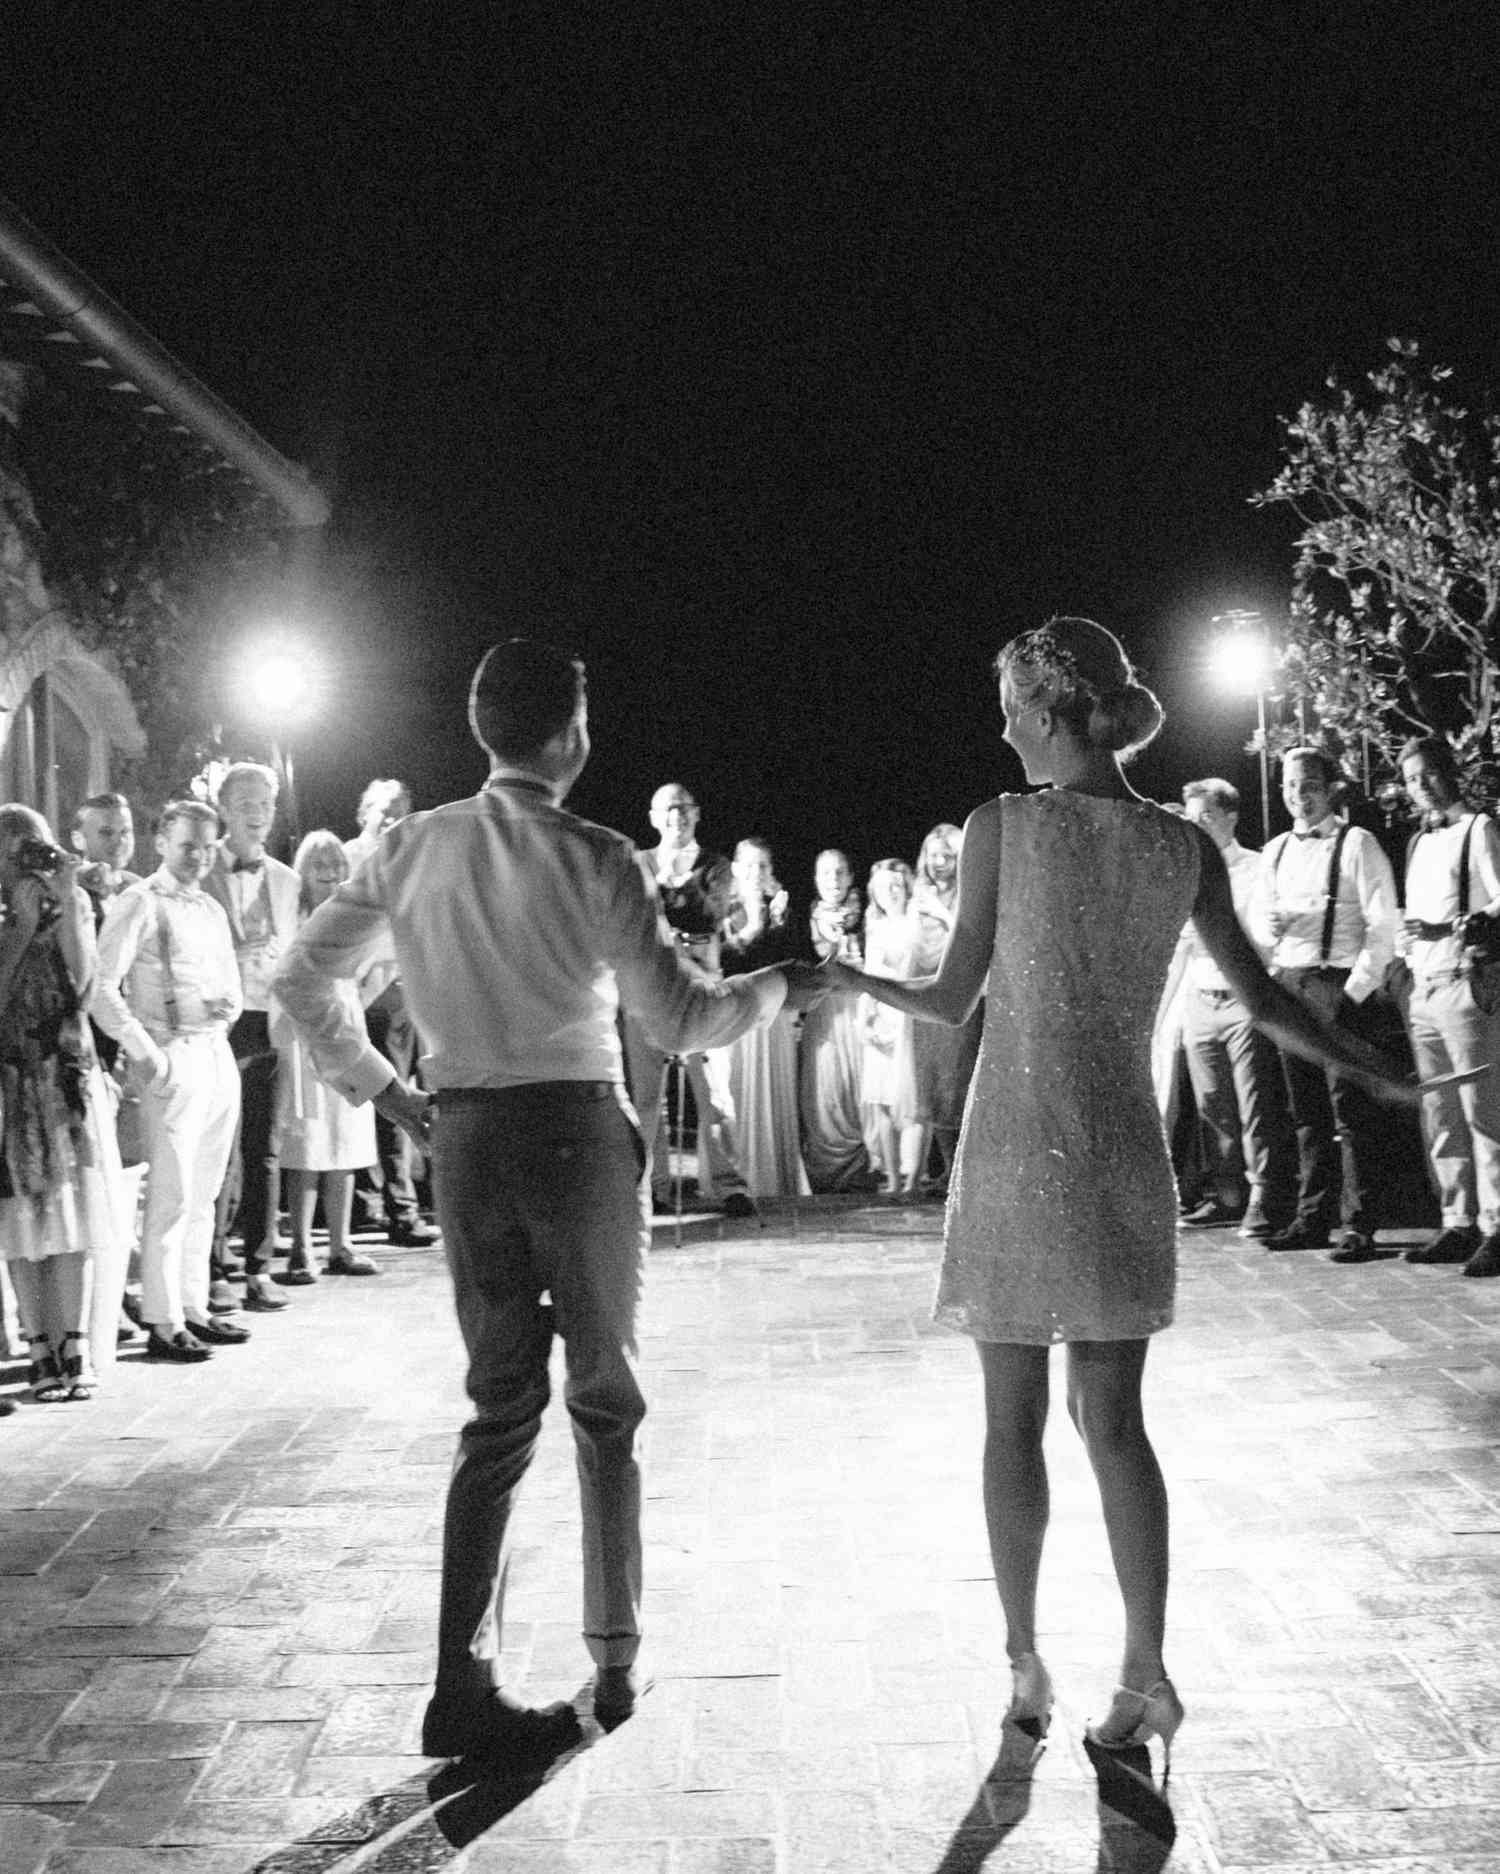 John Legend and Chrissy Teigen Kissing at Wedding